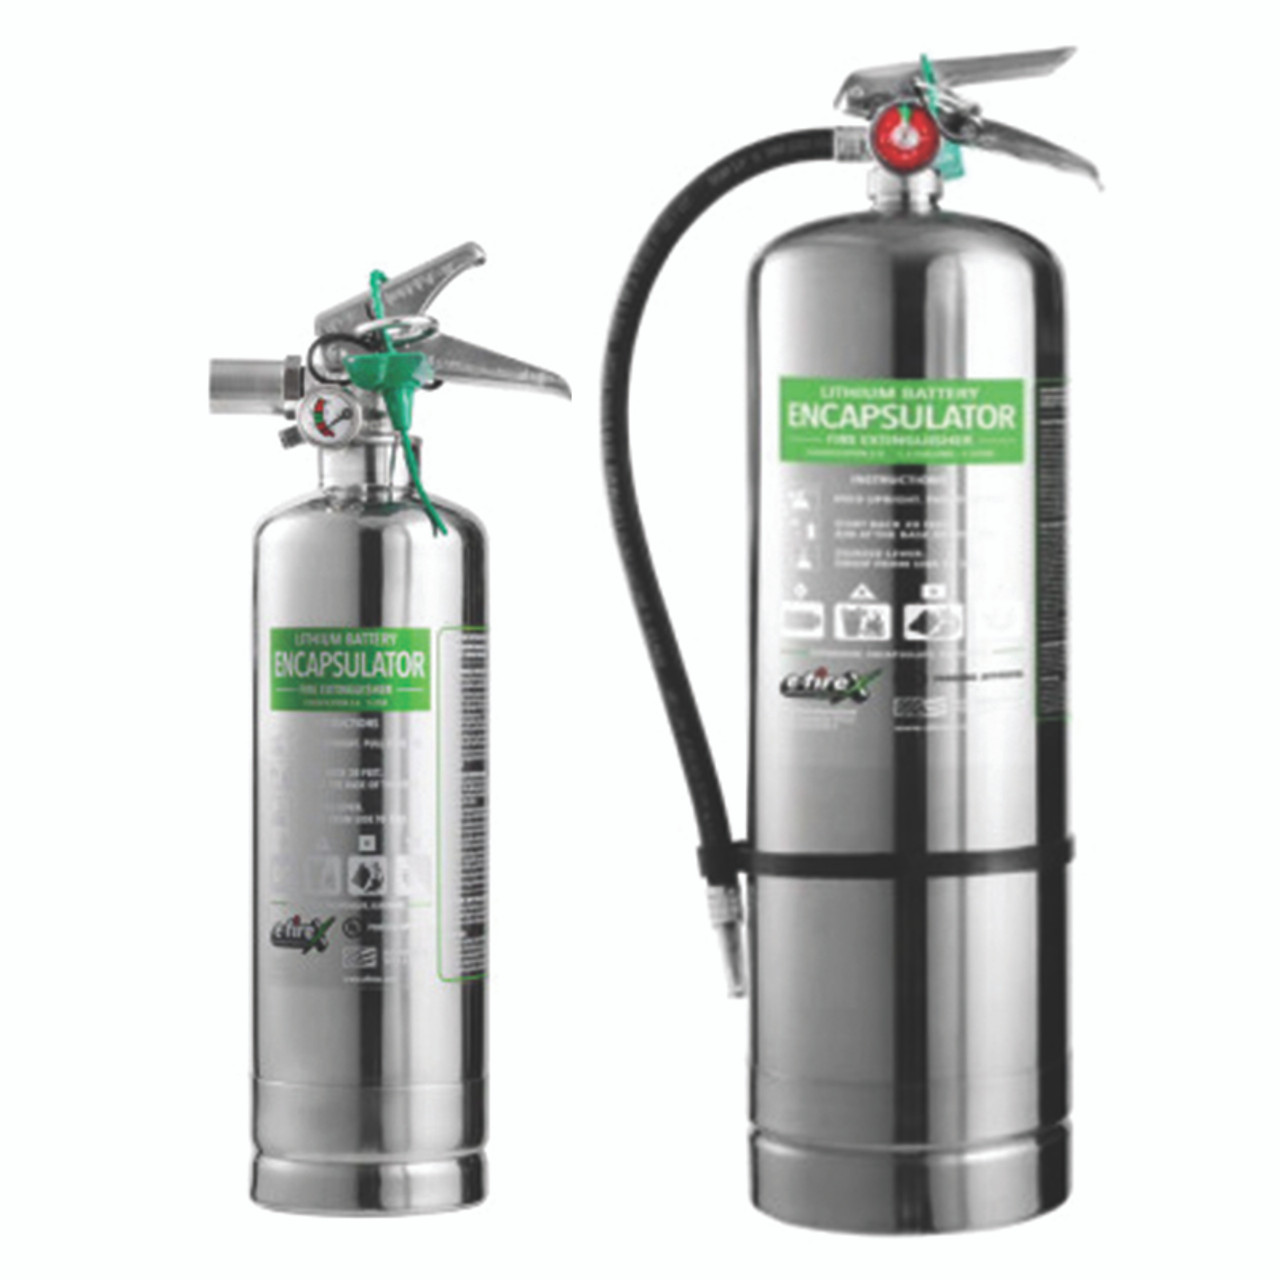 E-Firex Encapsulator Agent Inside Two Fire Extinguisher Sizes